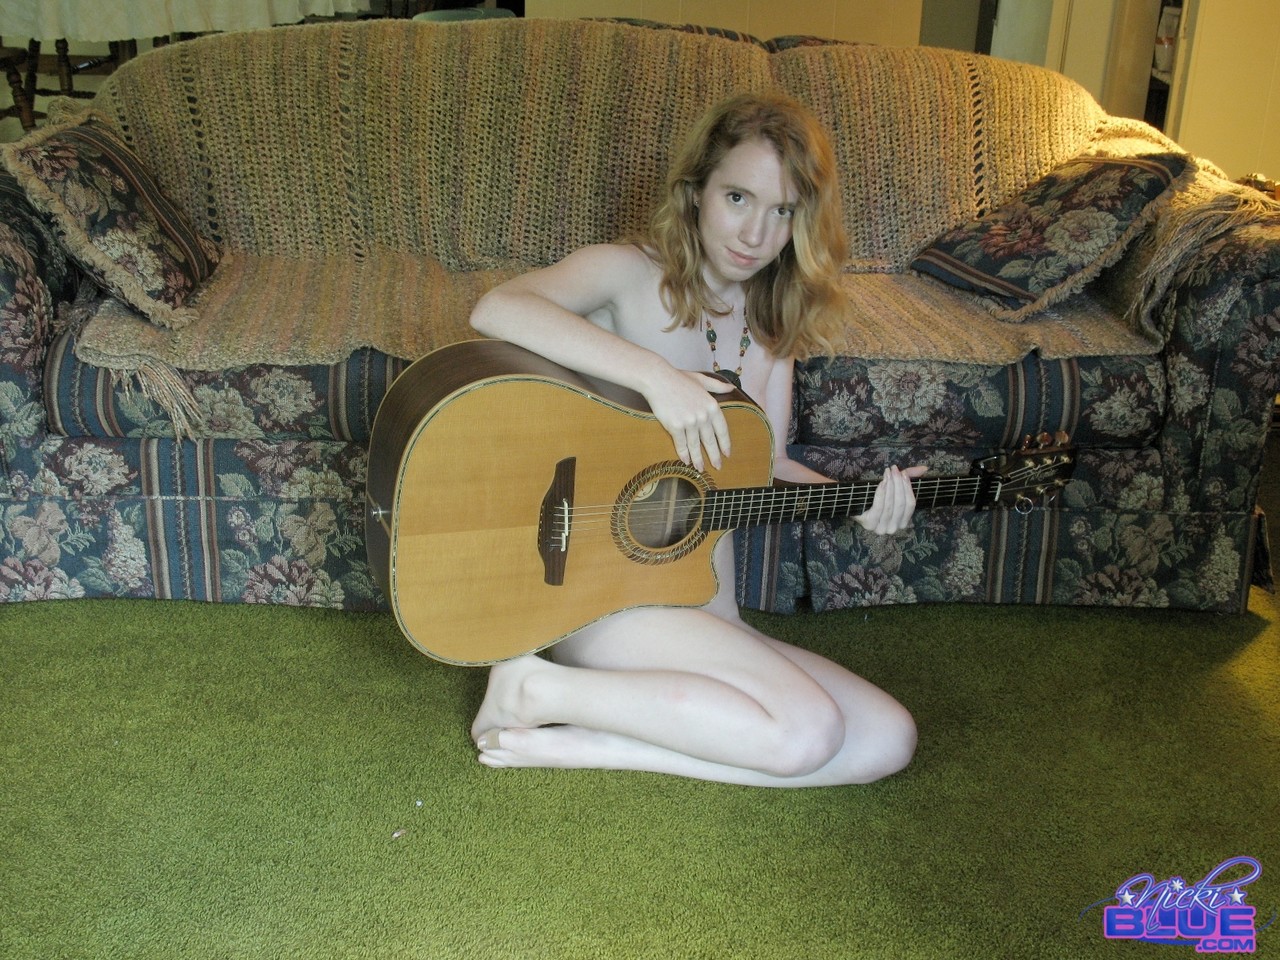 19-year-old babe Nicki Blue posing nude with a guitar in her hands photo porno #424548935 | Pornstar Platinum Pics, Nicki Blue, Redhead, porno mobile